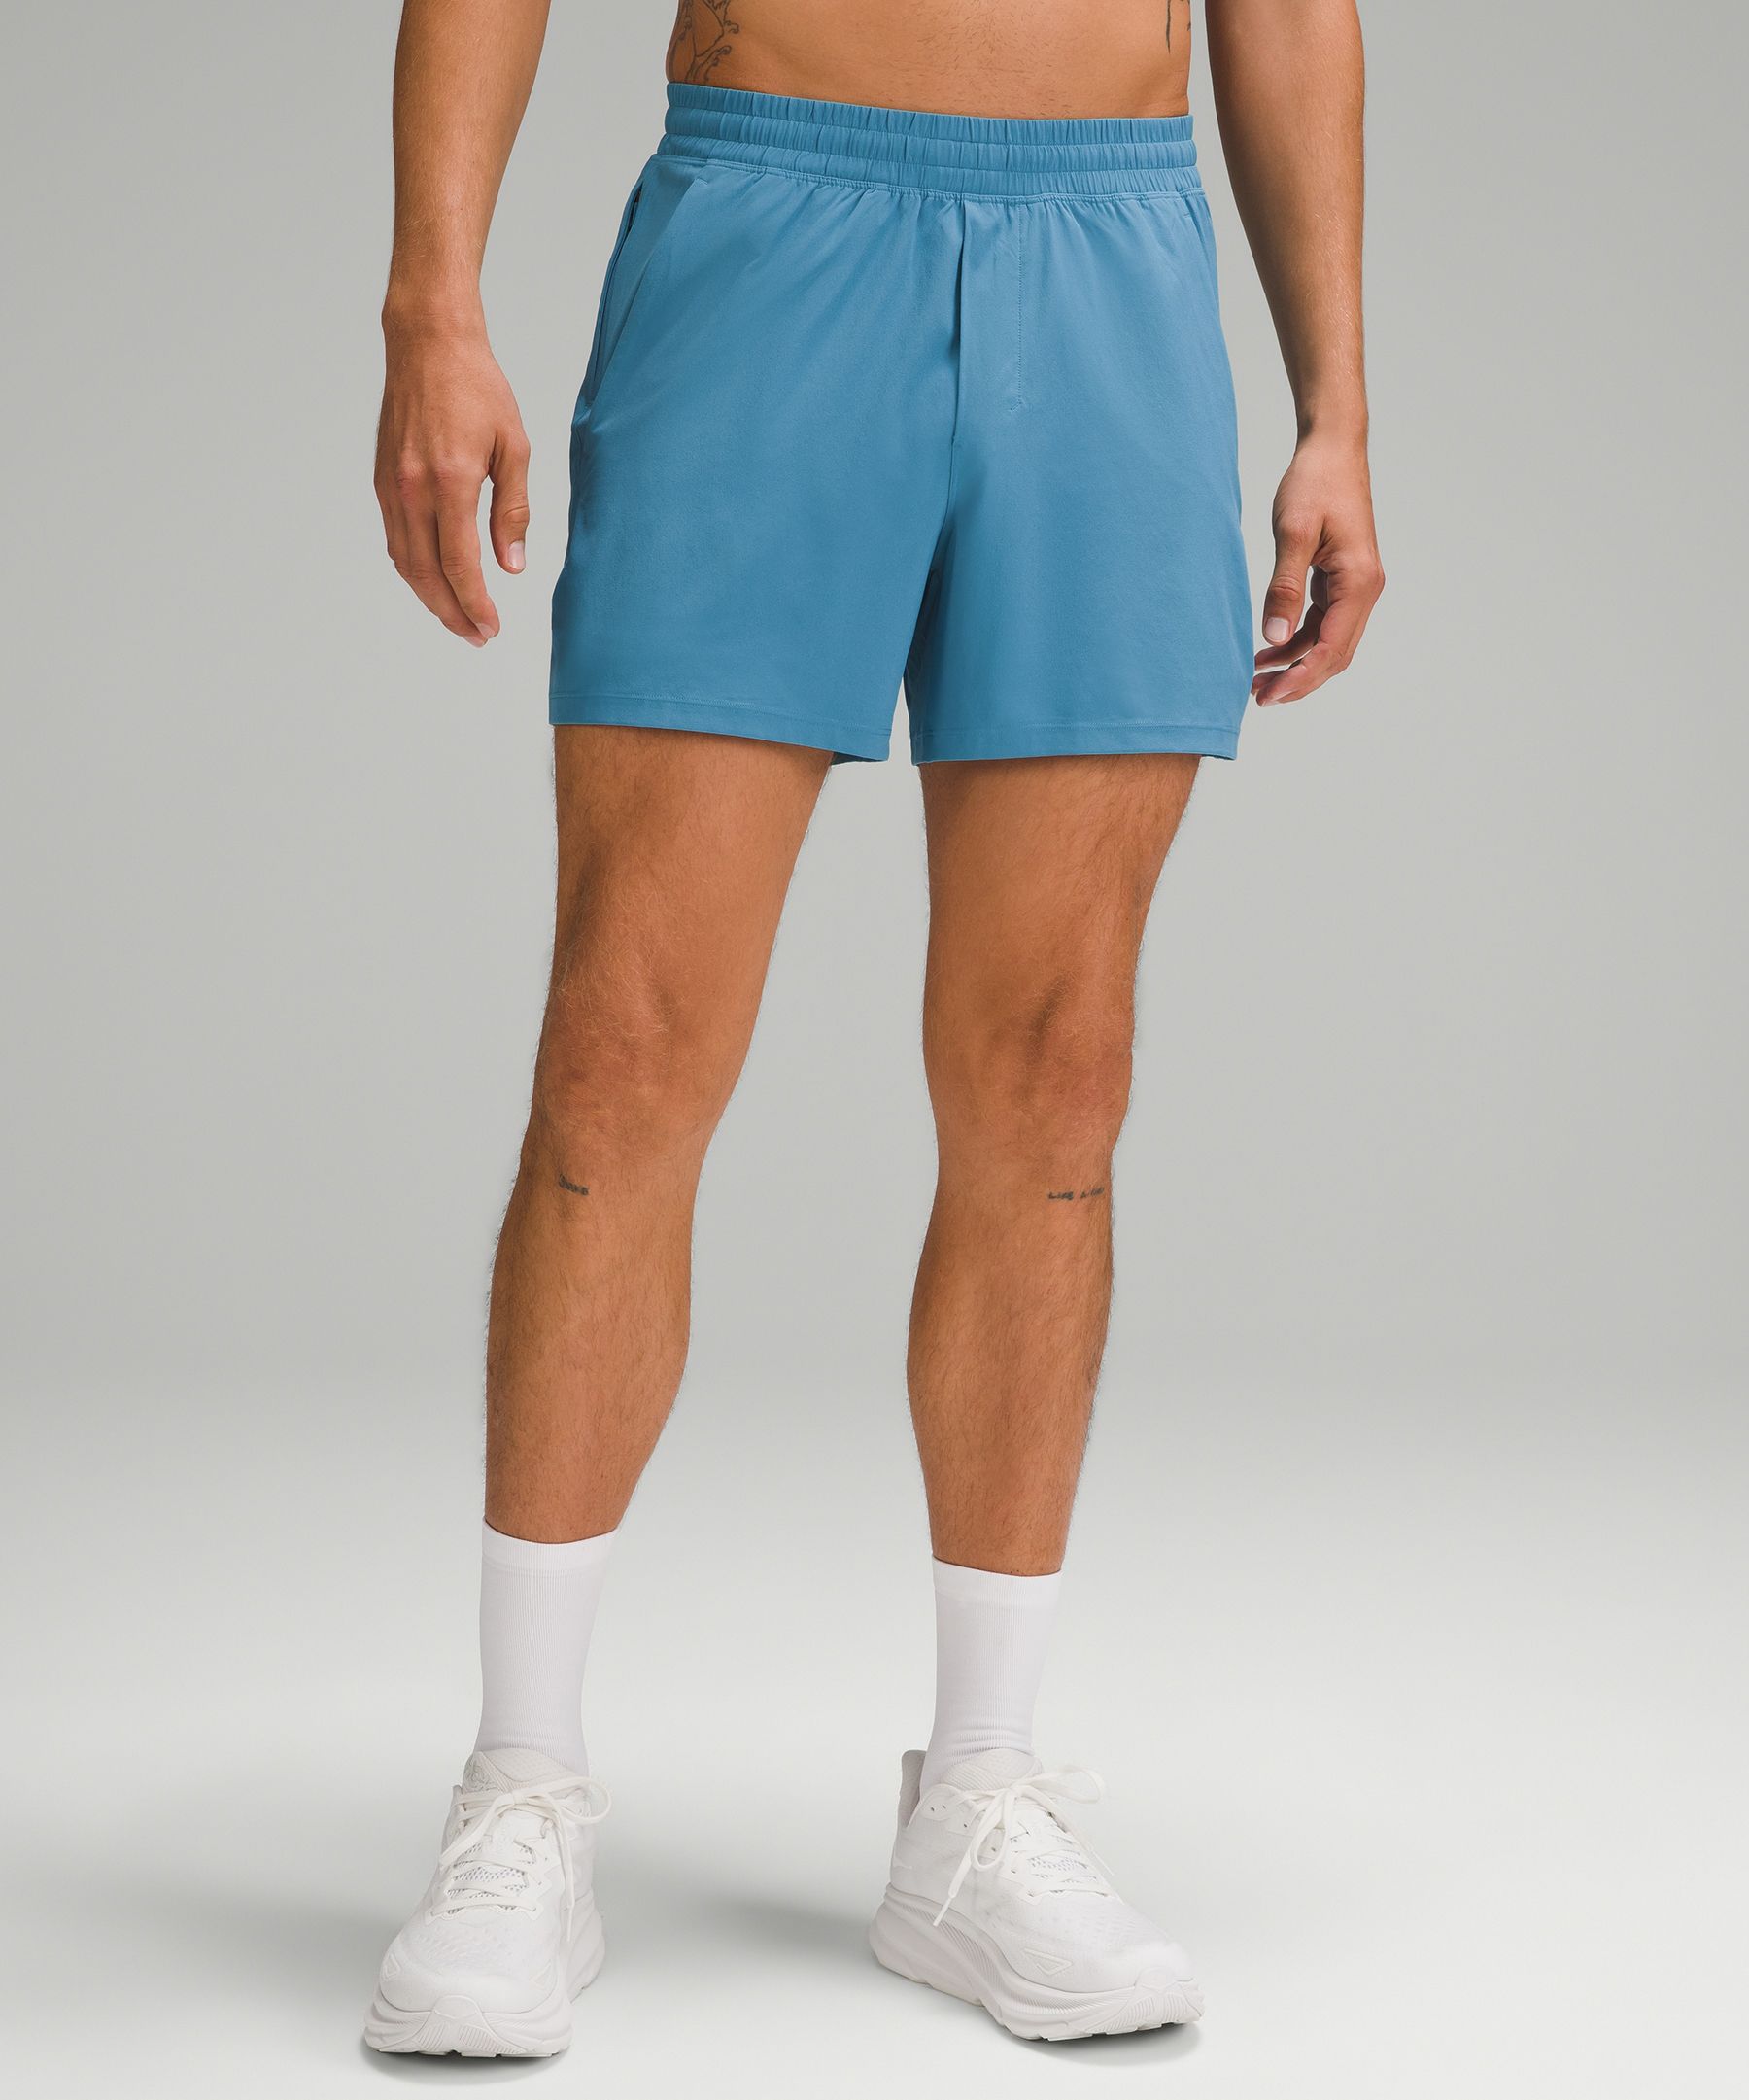 Shorts Men Casual Workout Running Shorts Lightweight Pocket Yoga Gym Shorts  Hipster Drawstring Men Shorts at  Men's Clothing store